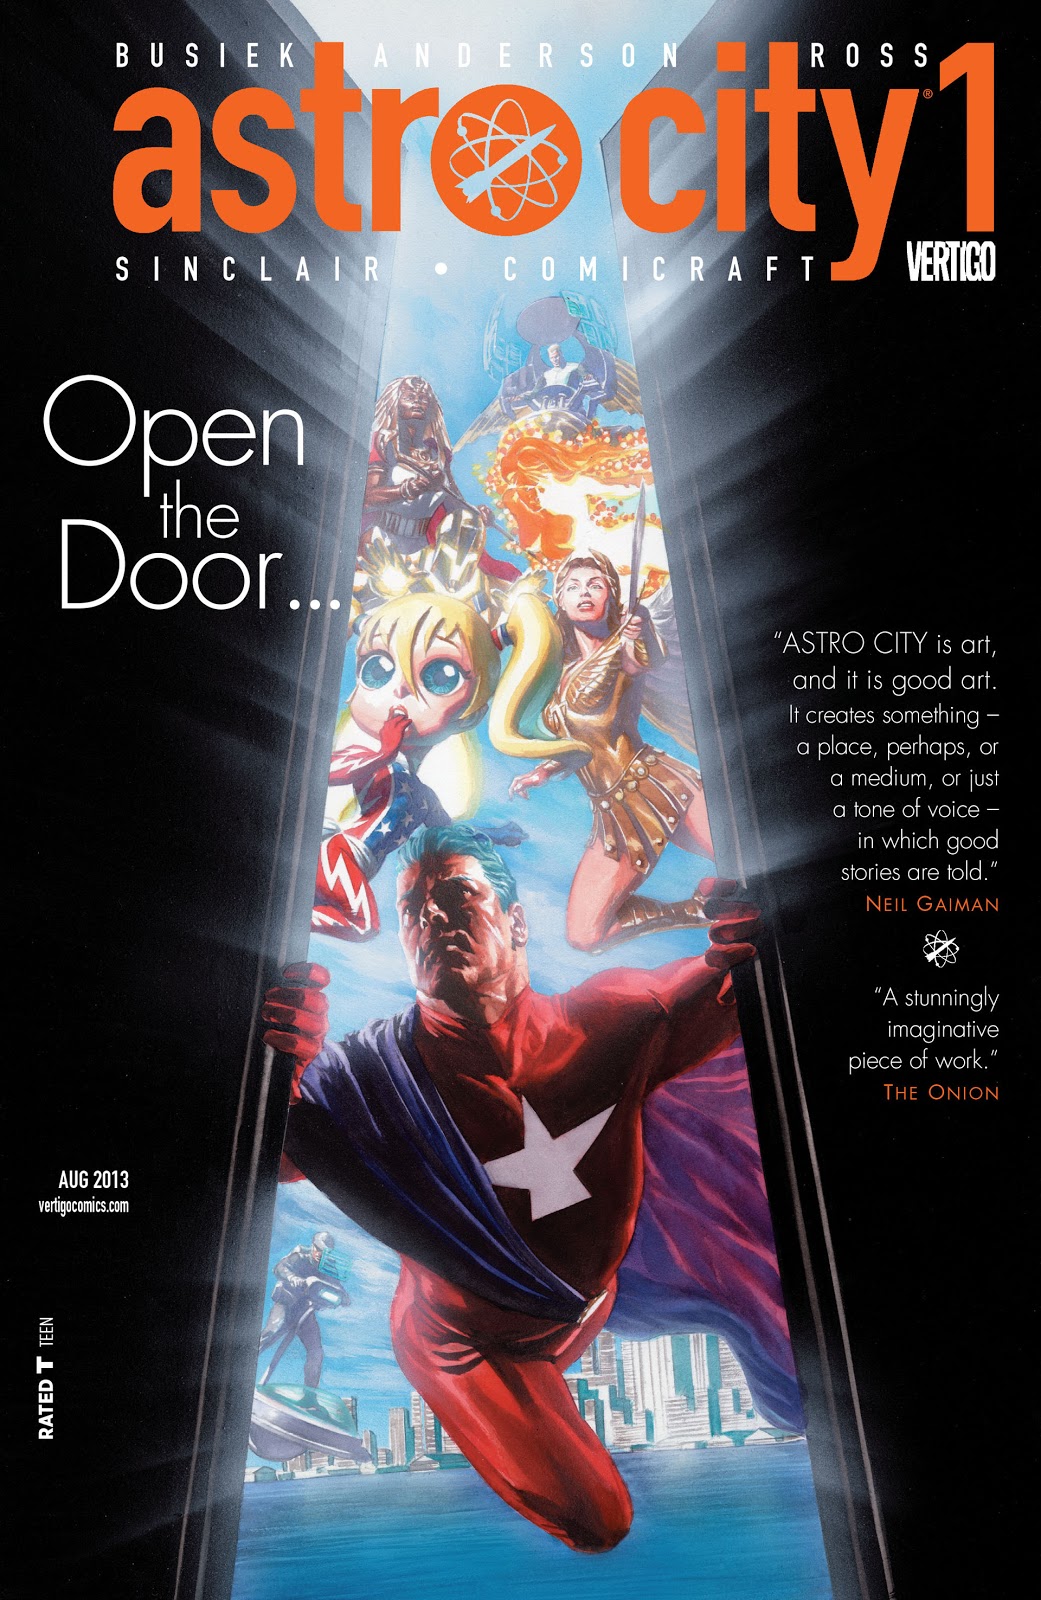 Samaritan opening doors leading to reader's POV, other superheroes behind him